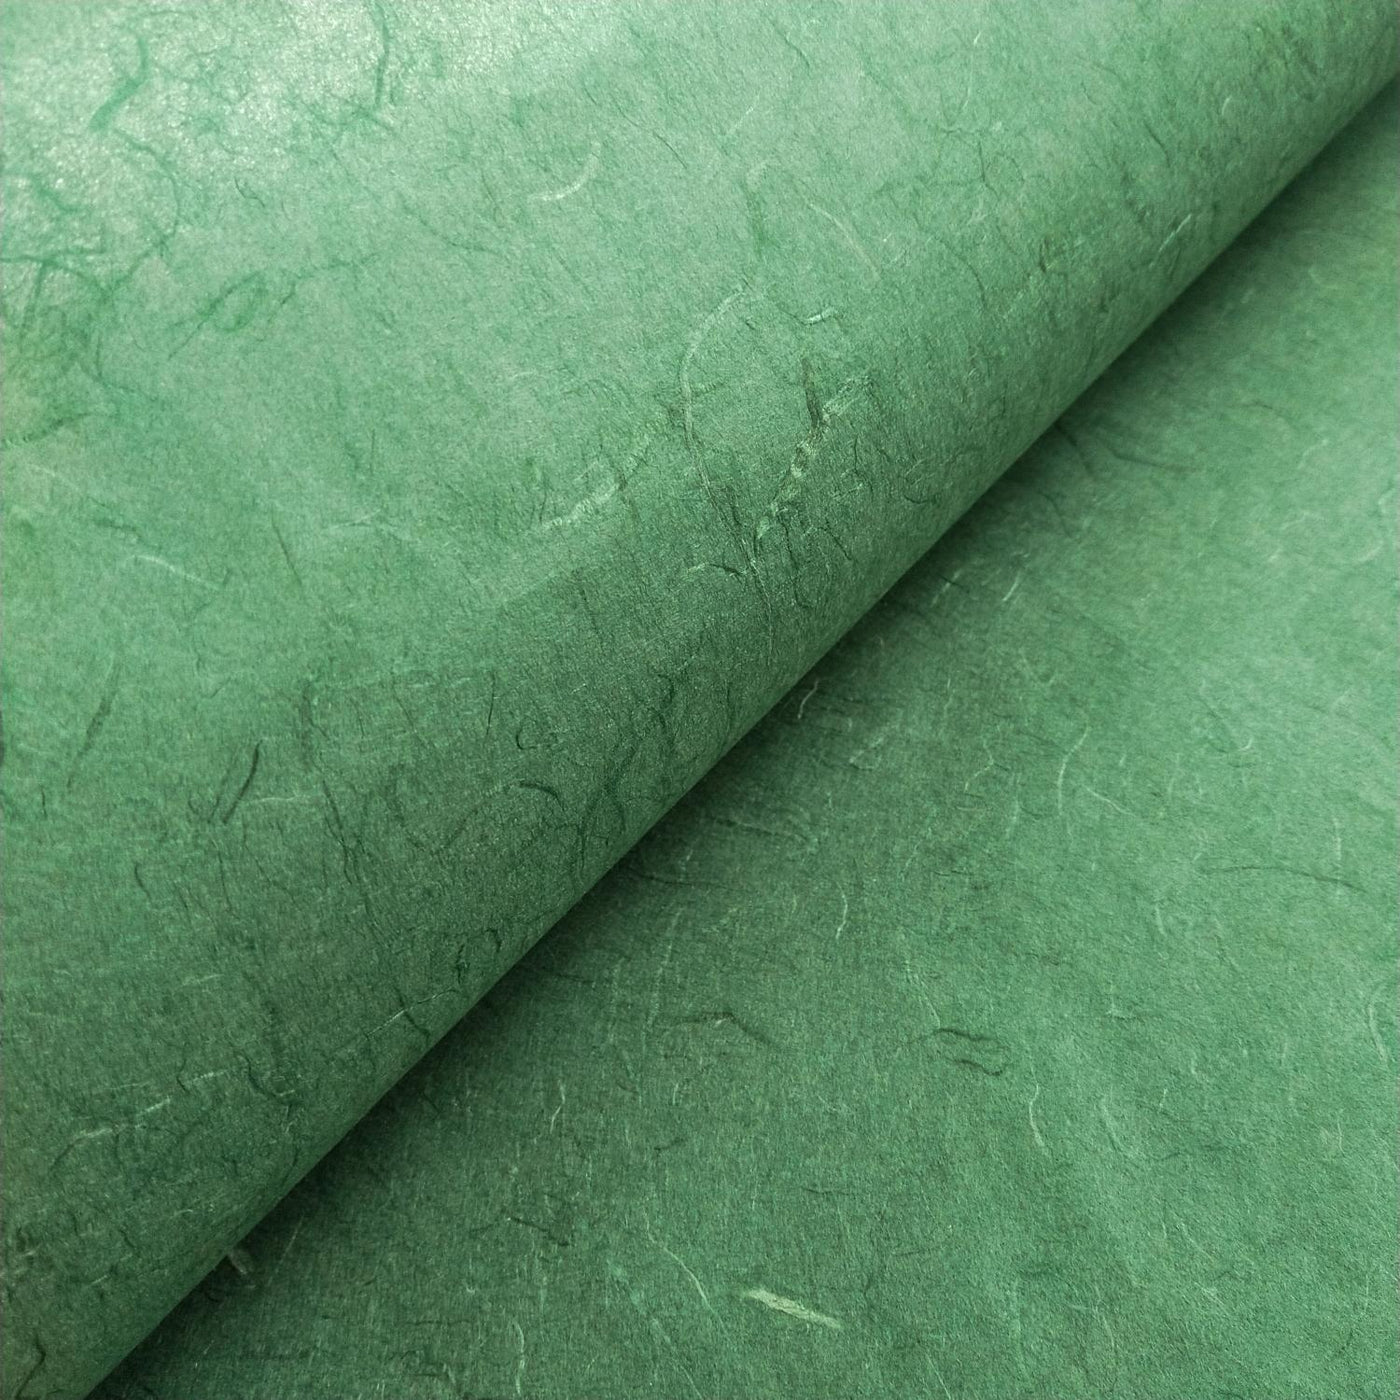 Unryu Kozo Mulberry Paper (Amazon Green)